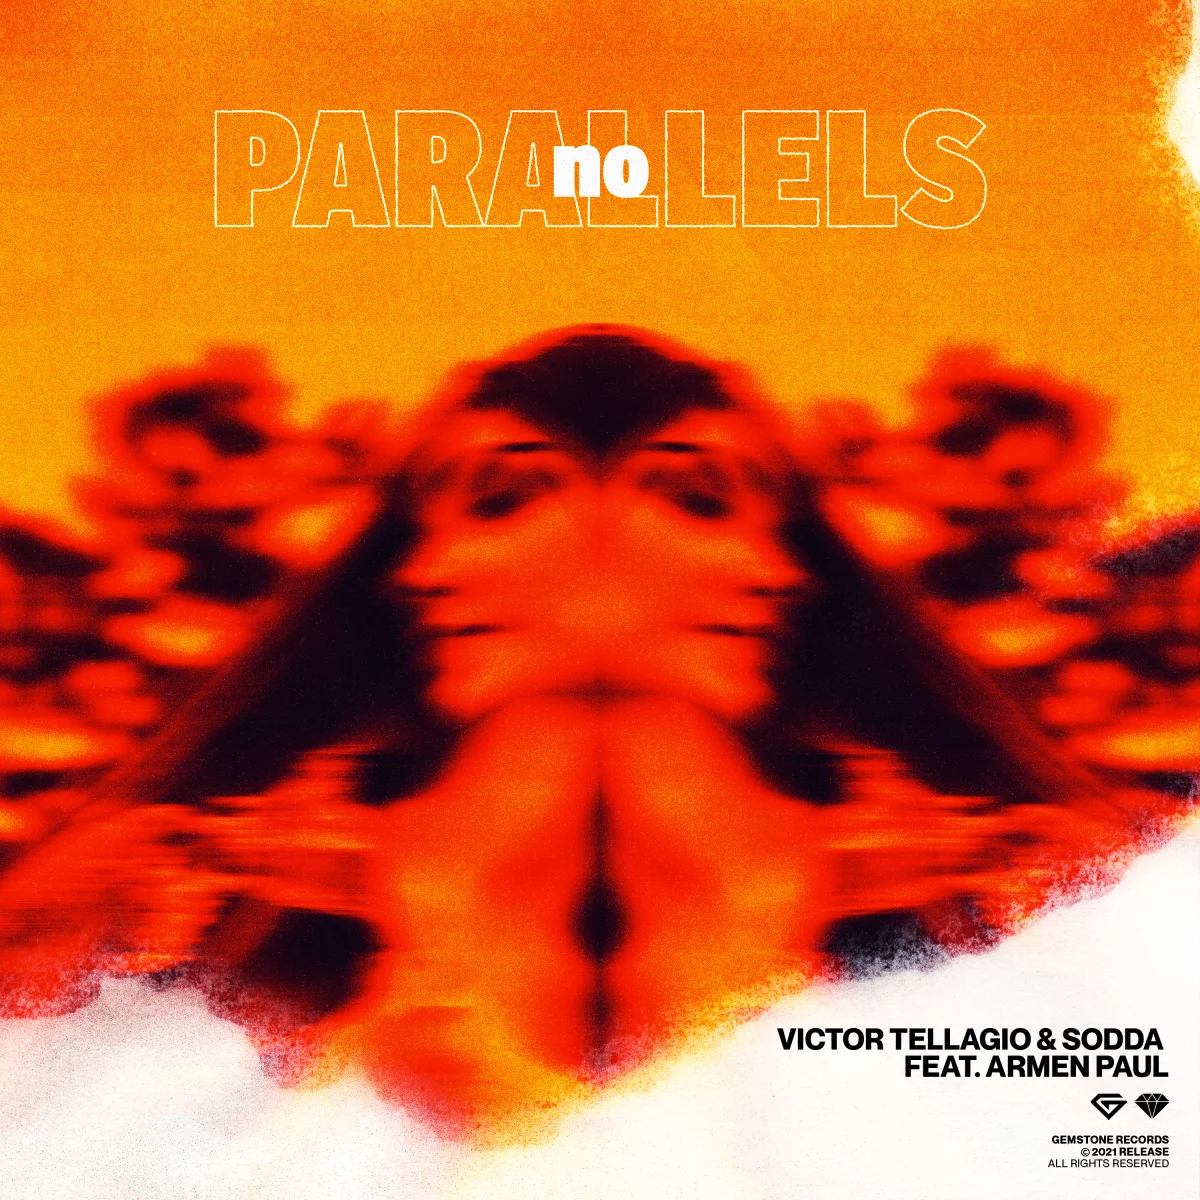 No Parallels - Victor Tellagio⁠ & Sodda⁠⁠ feat. Armen Paul⁠